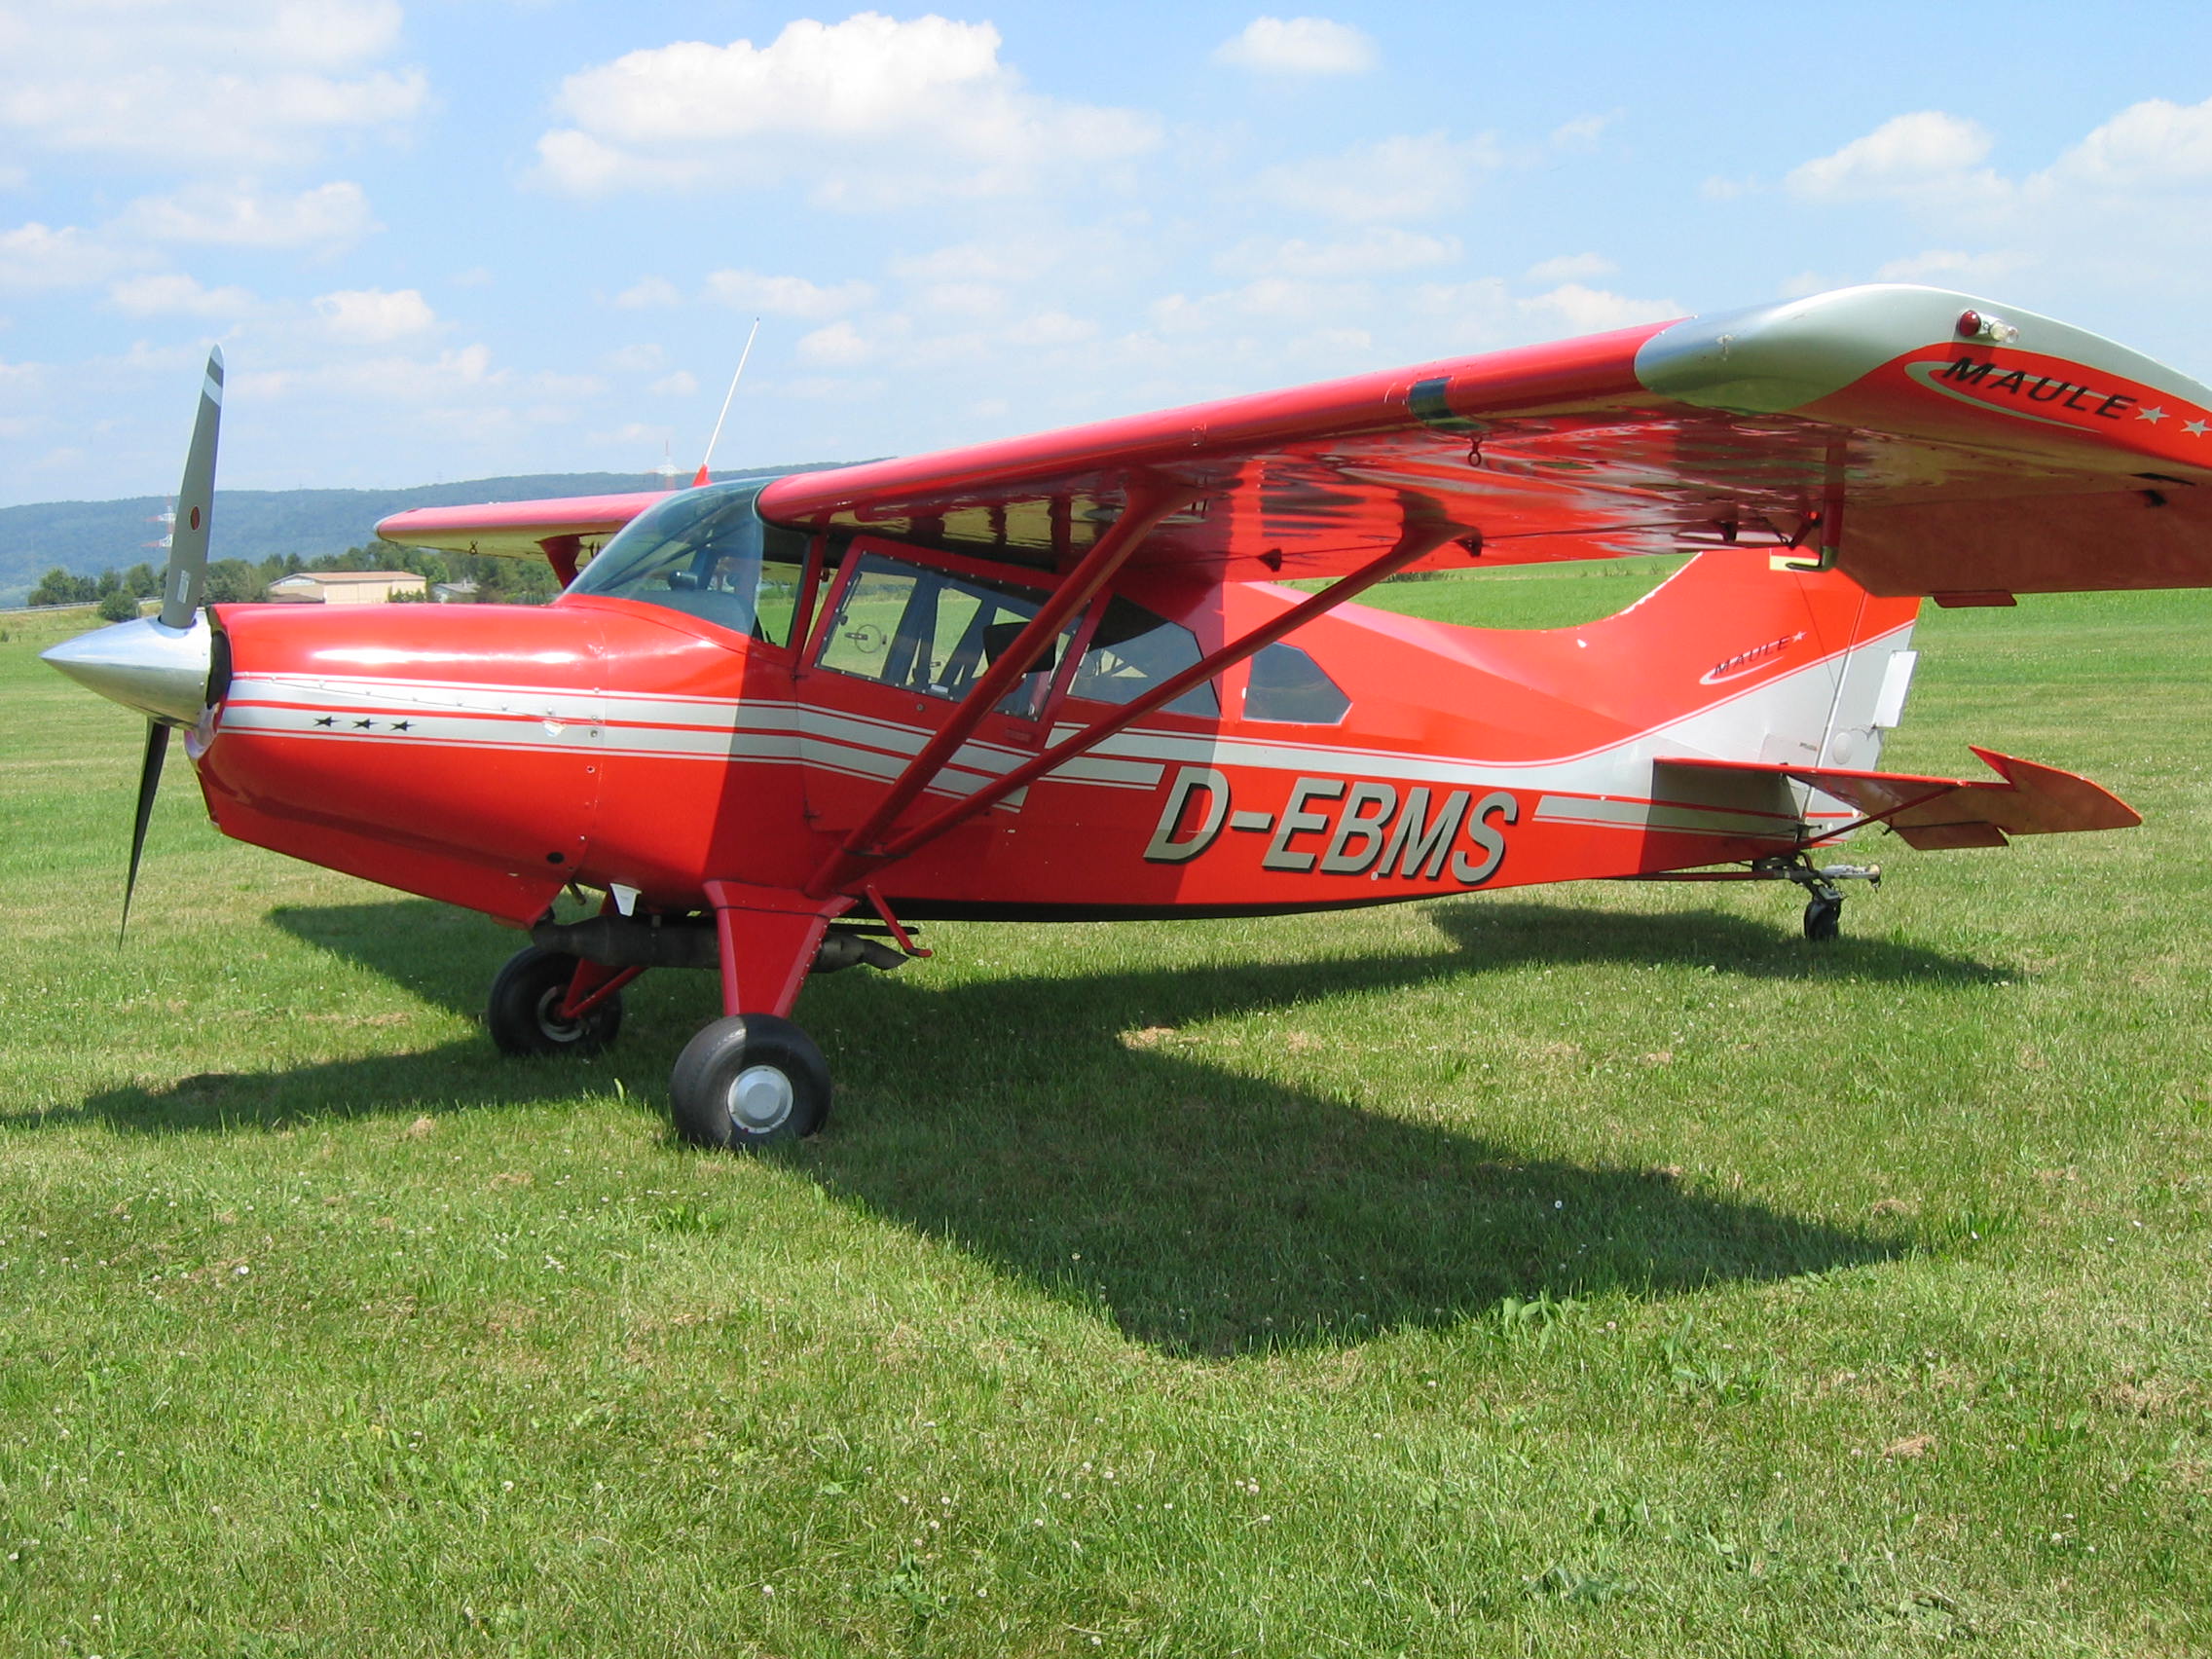 Flugplatz Walldorf - Rotes Motorflugzeug